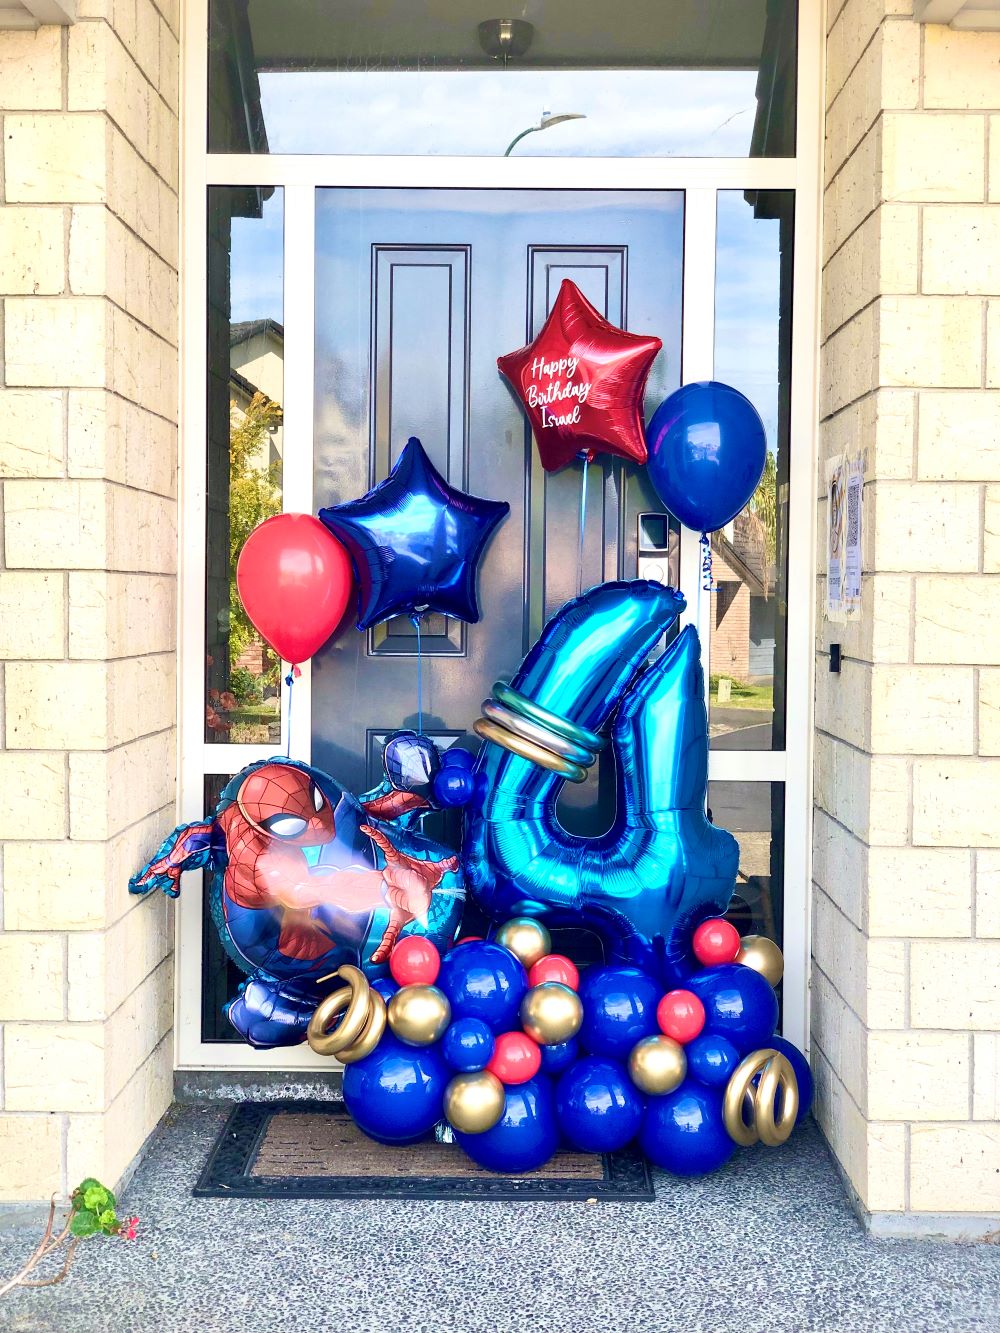 My Party Box Spider Man Balloon Bouquet